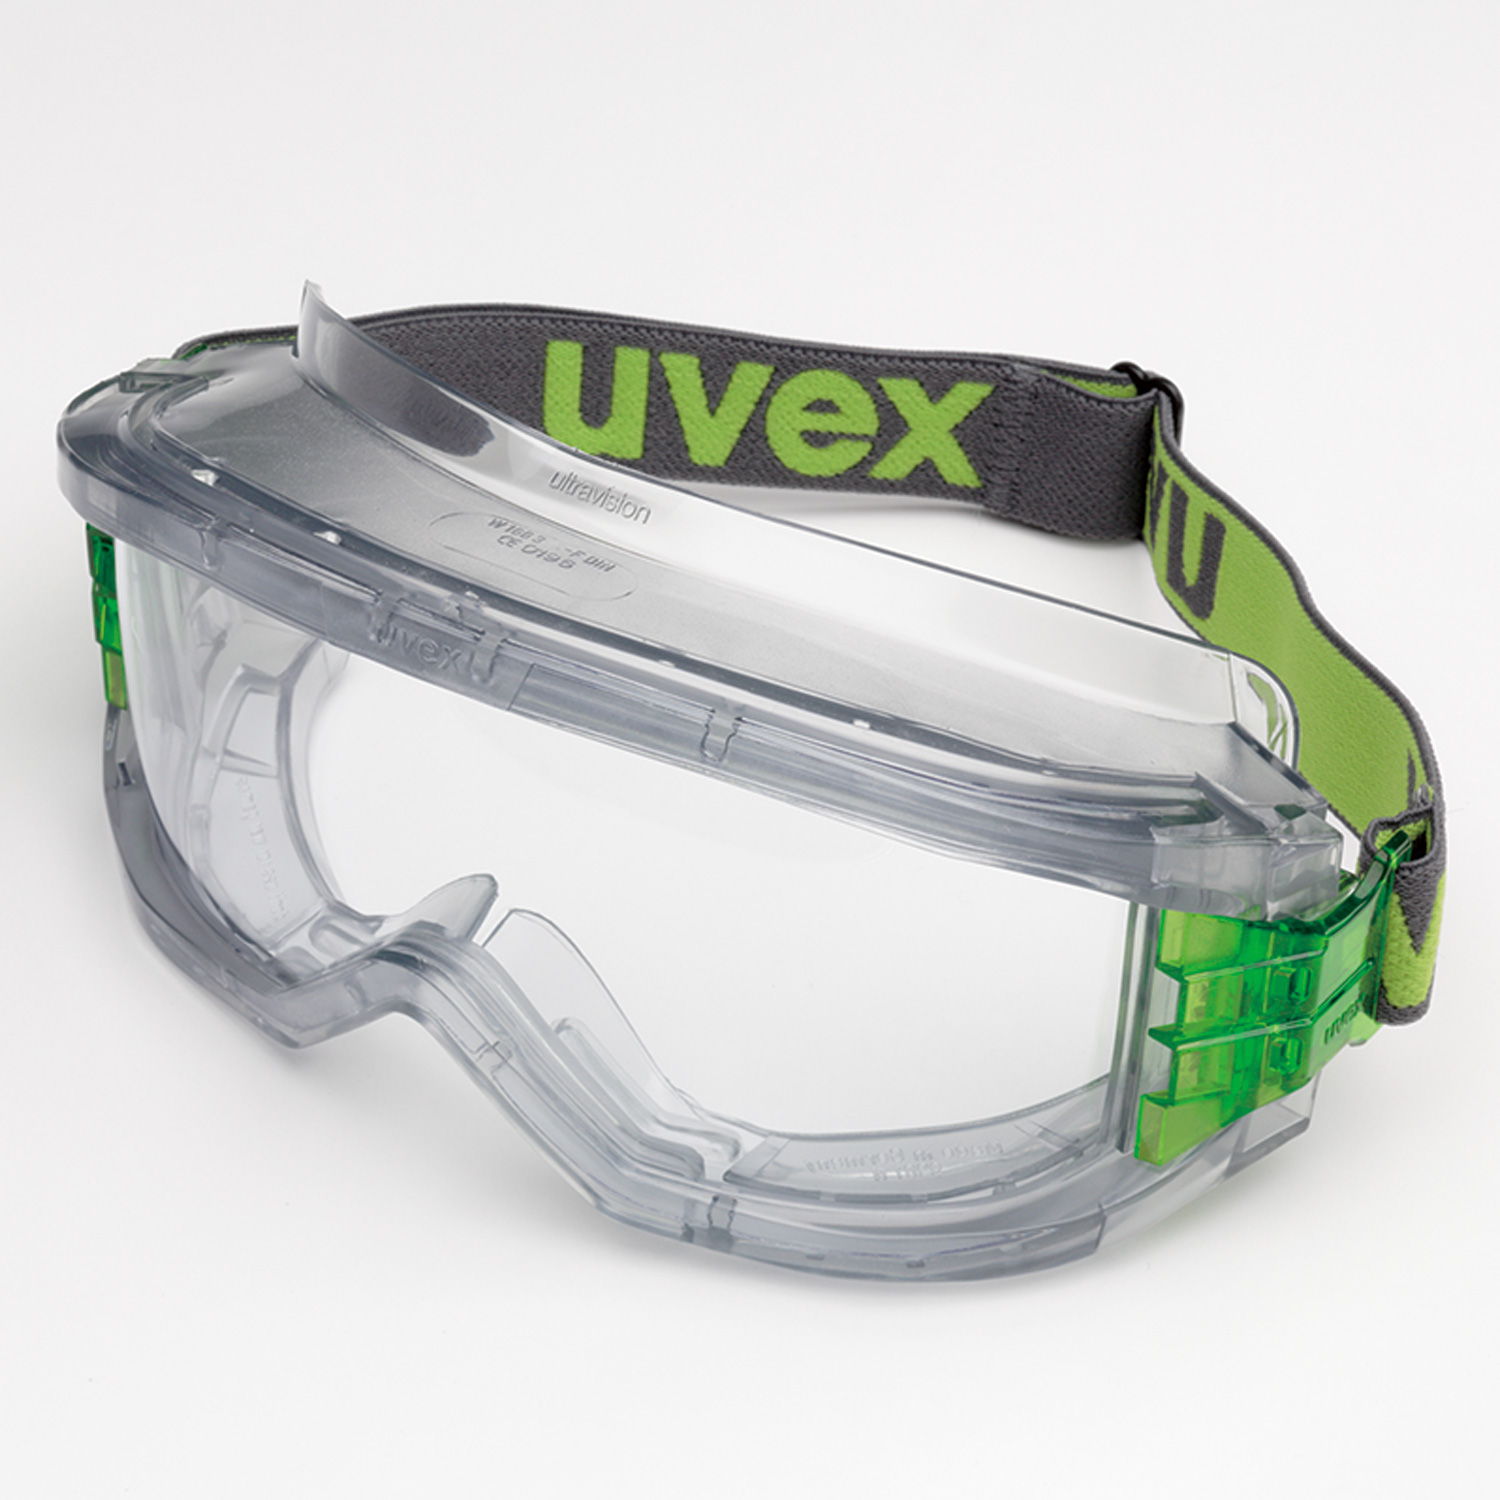 Goggles X-9301 ultra vision